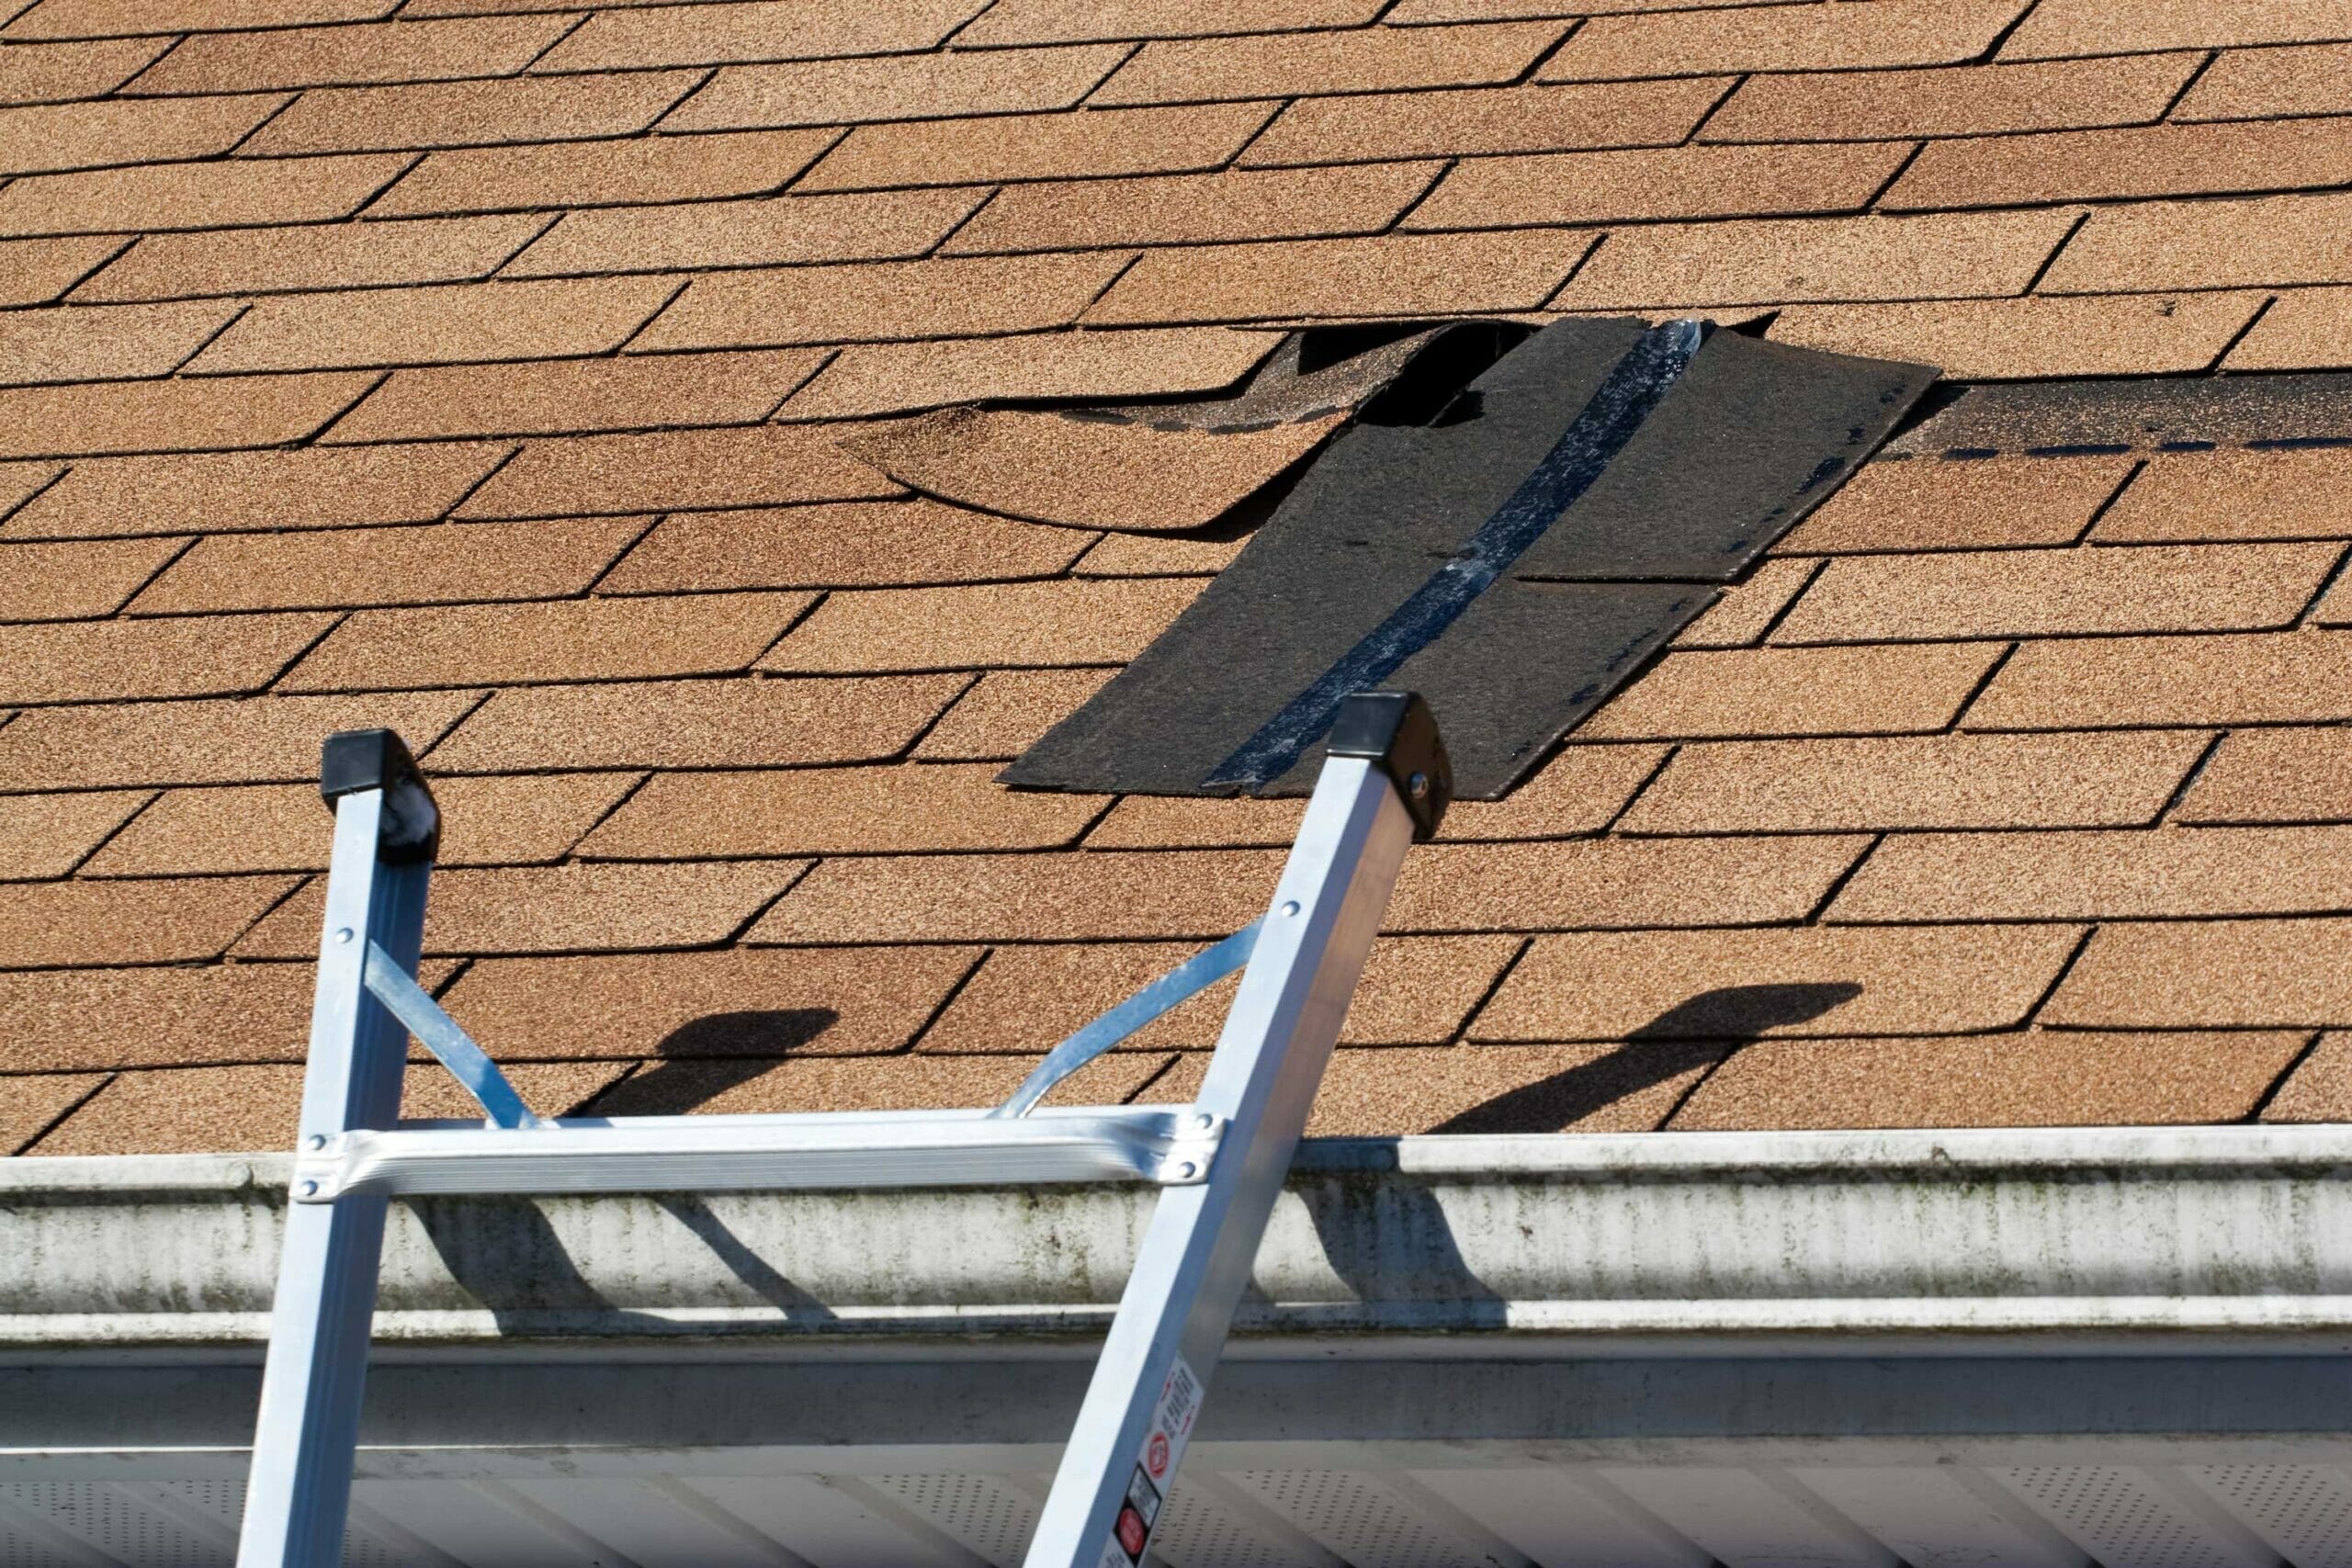 Trusted Spring Damage Roof Repair Company in Billings